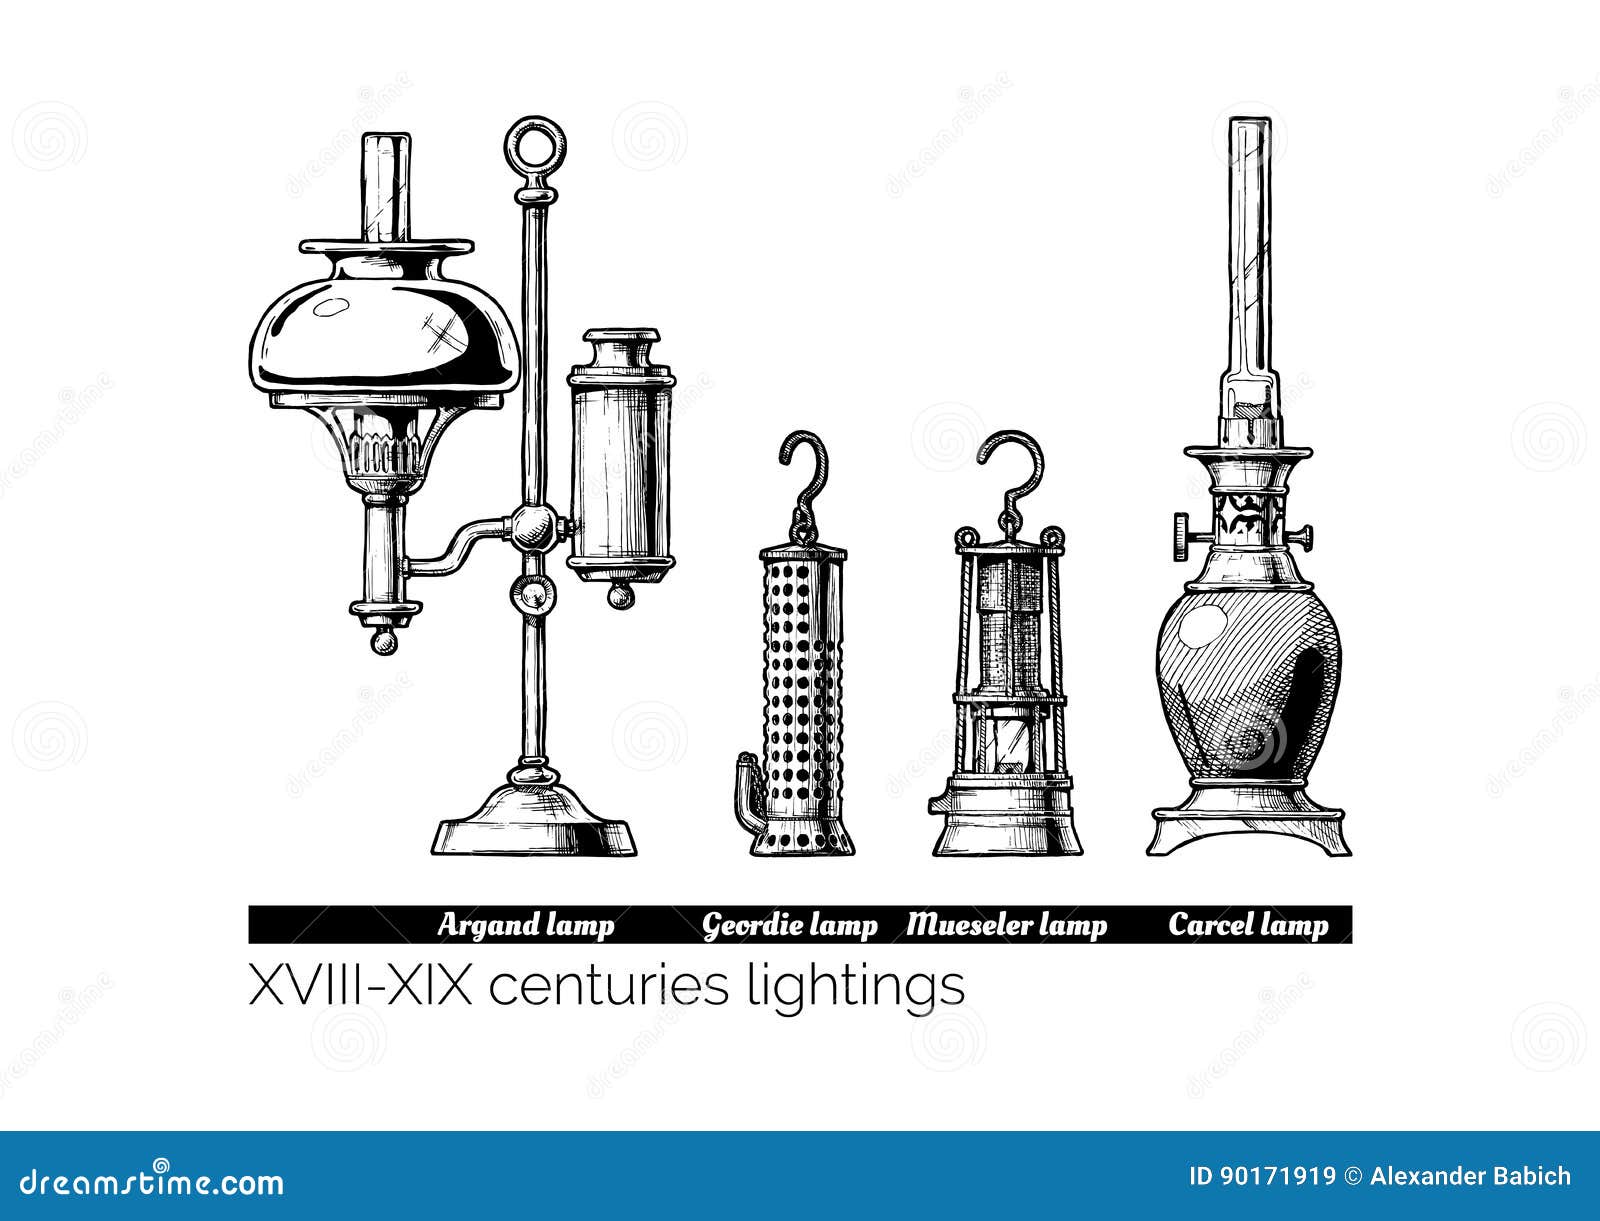 xviii - xix centuries lightings